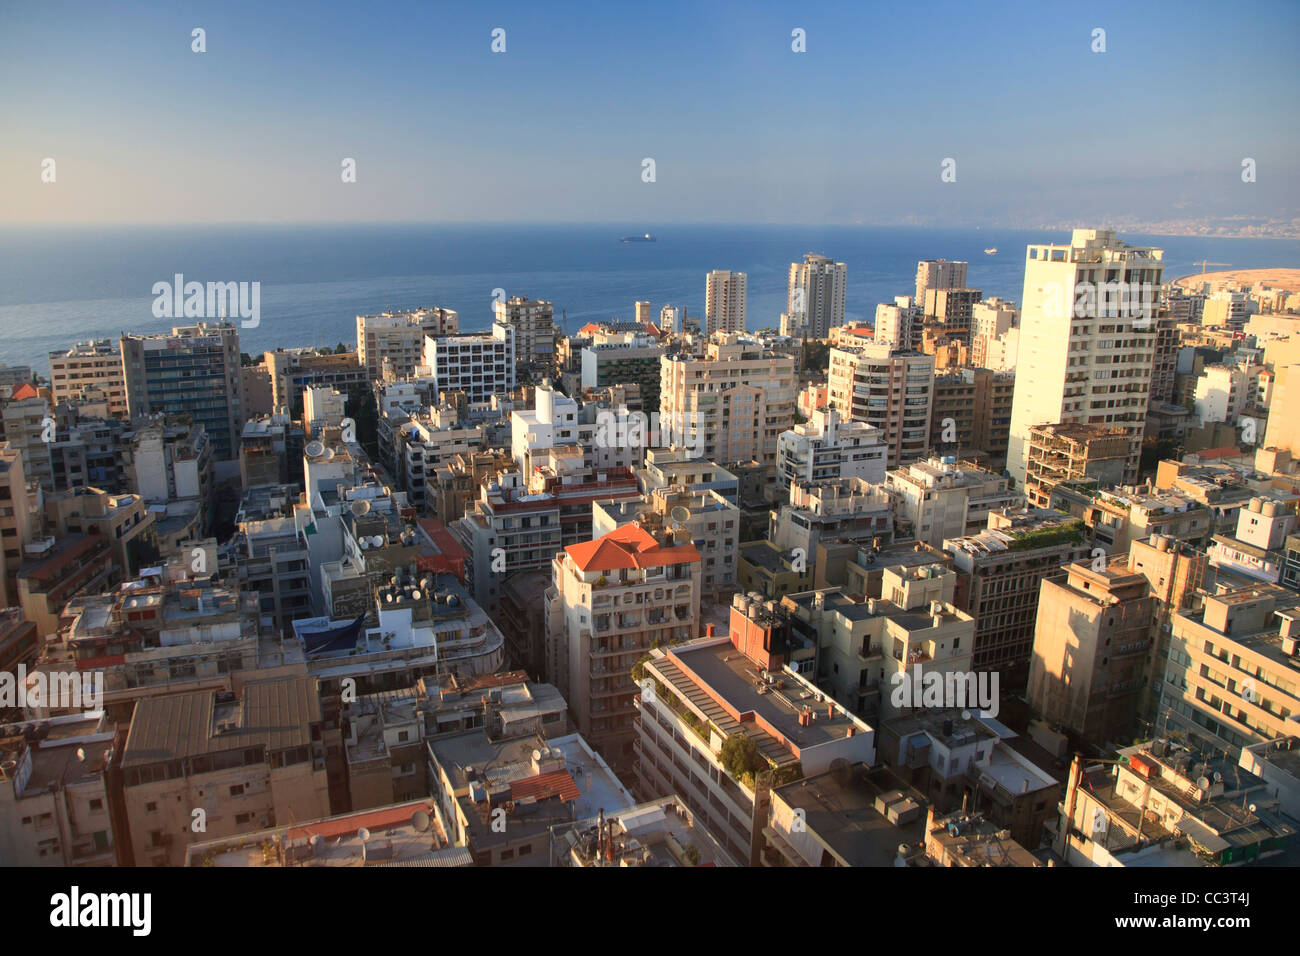 Lebanon, Beirut, aerial view Stock Photo